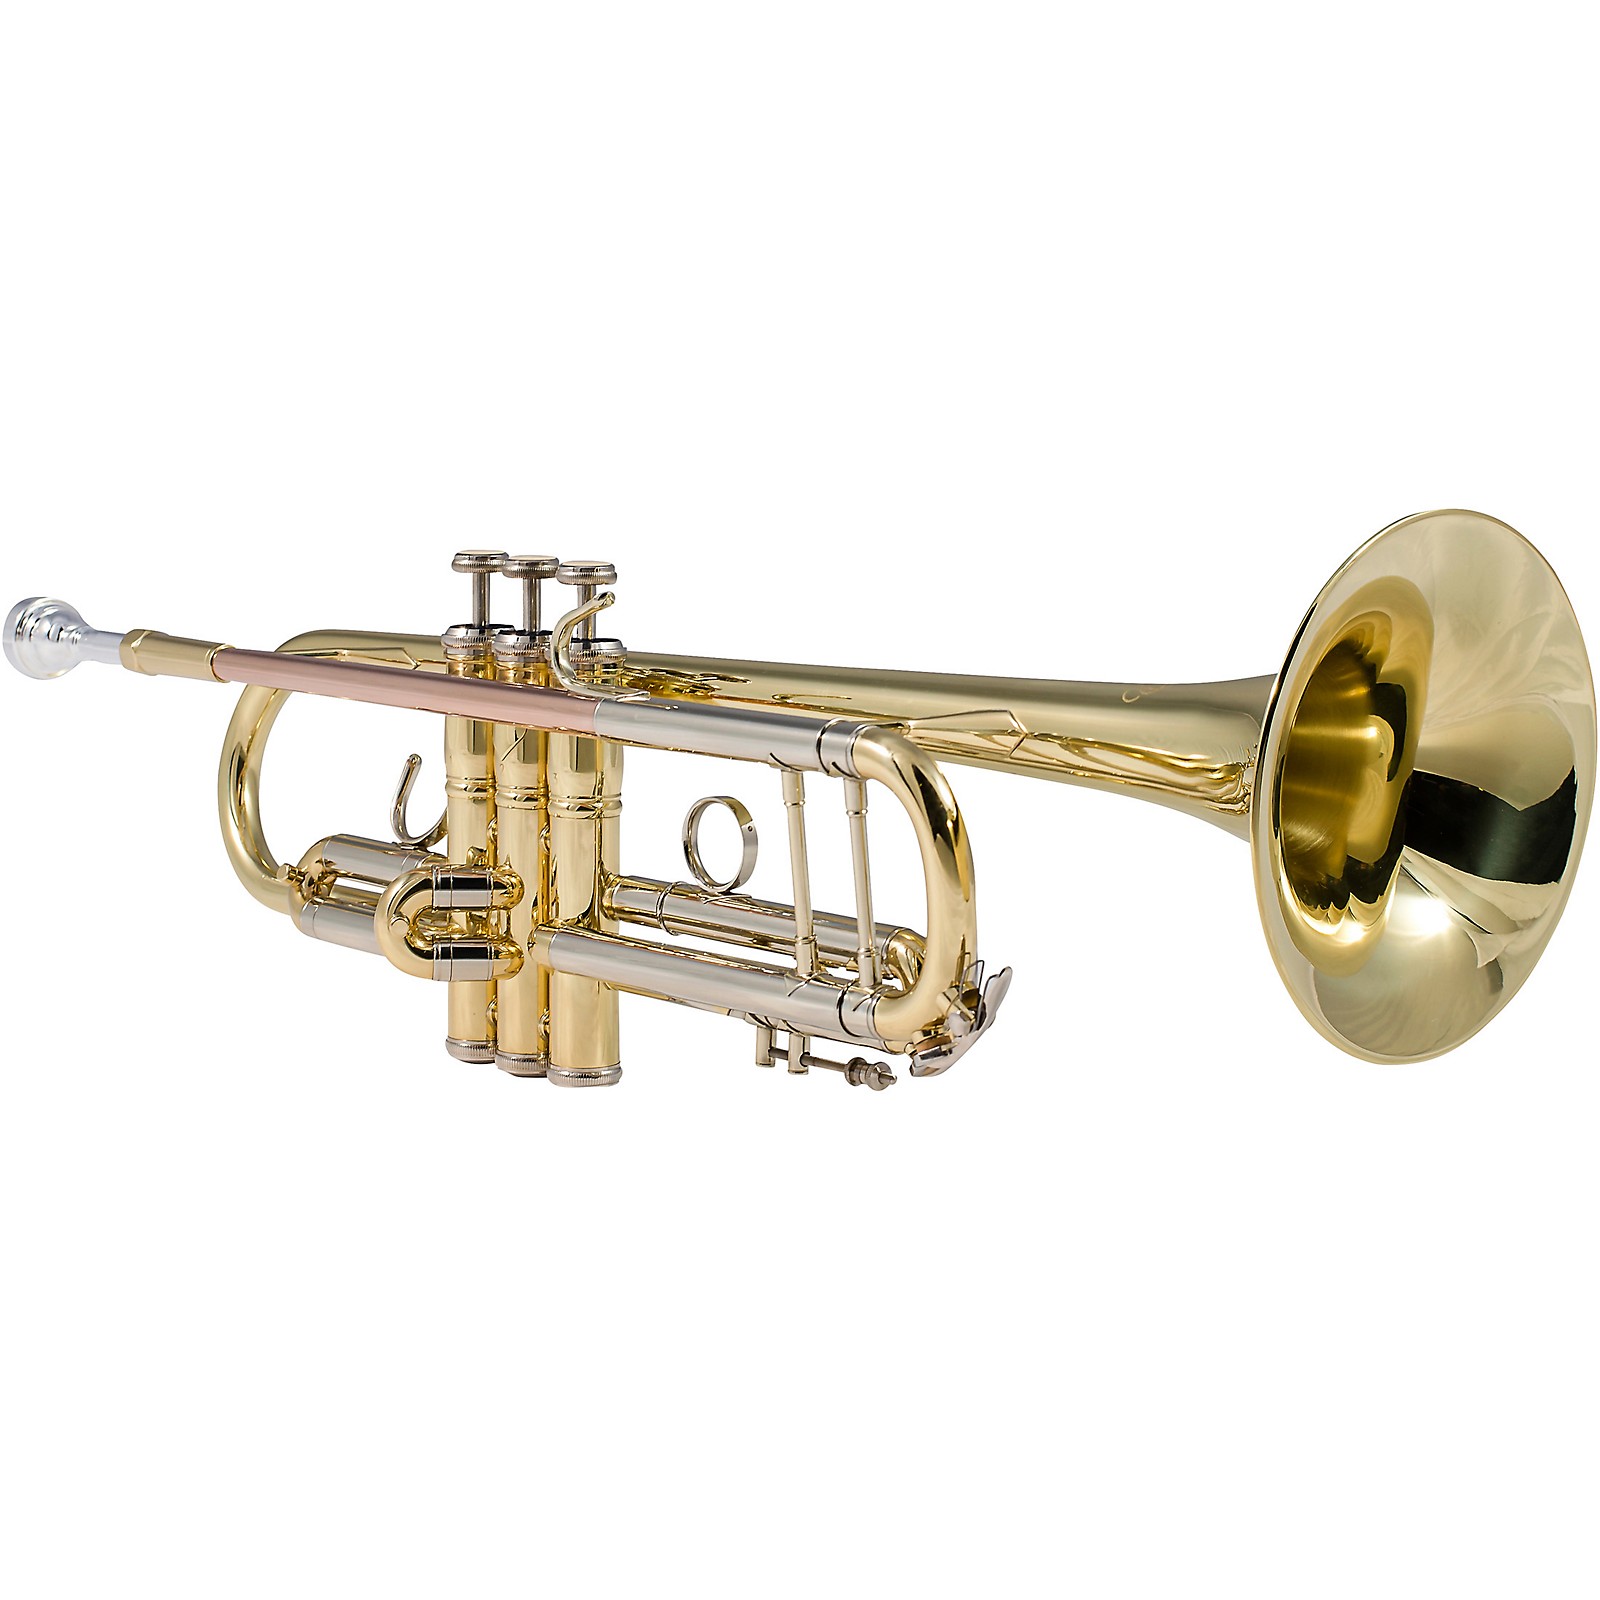 Etude Etude ETR-200 Series Student Bb Trumpet